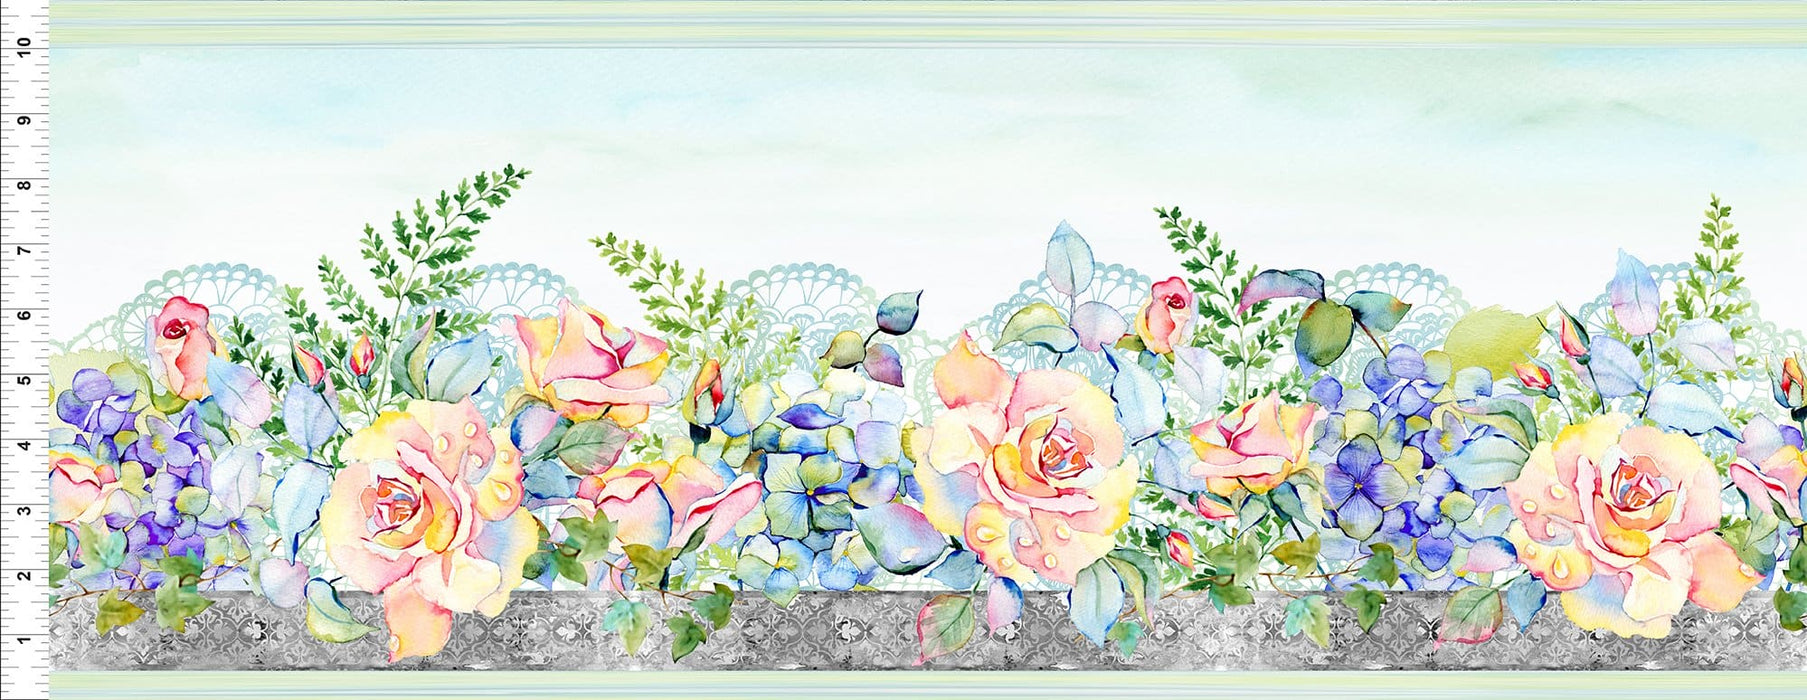 Patricia - Green/Teal Dot Plaid - Per Yard - by In The Beginning Fabrics - Floral, Pastels, Digital Print - Green/Teal - 8PAT1